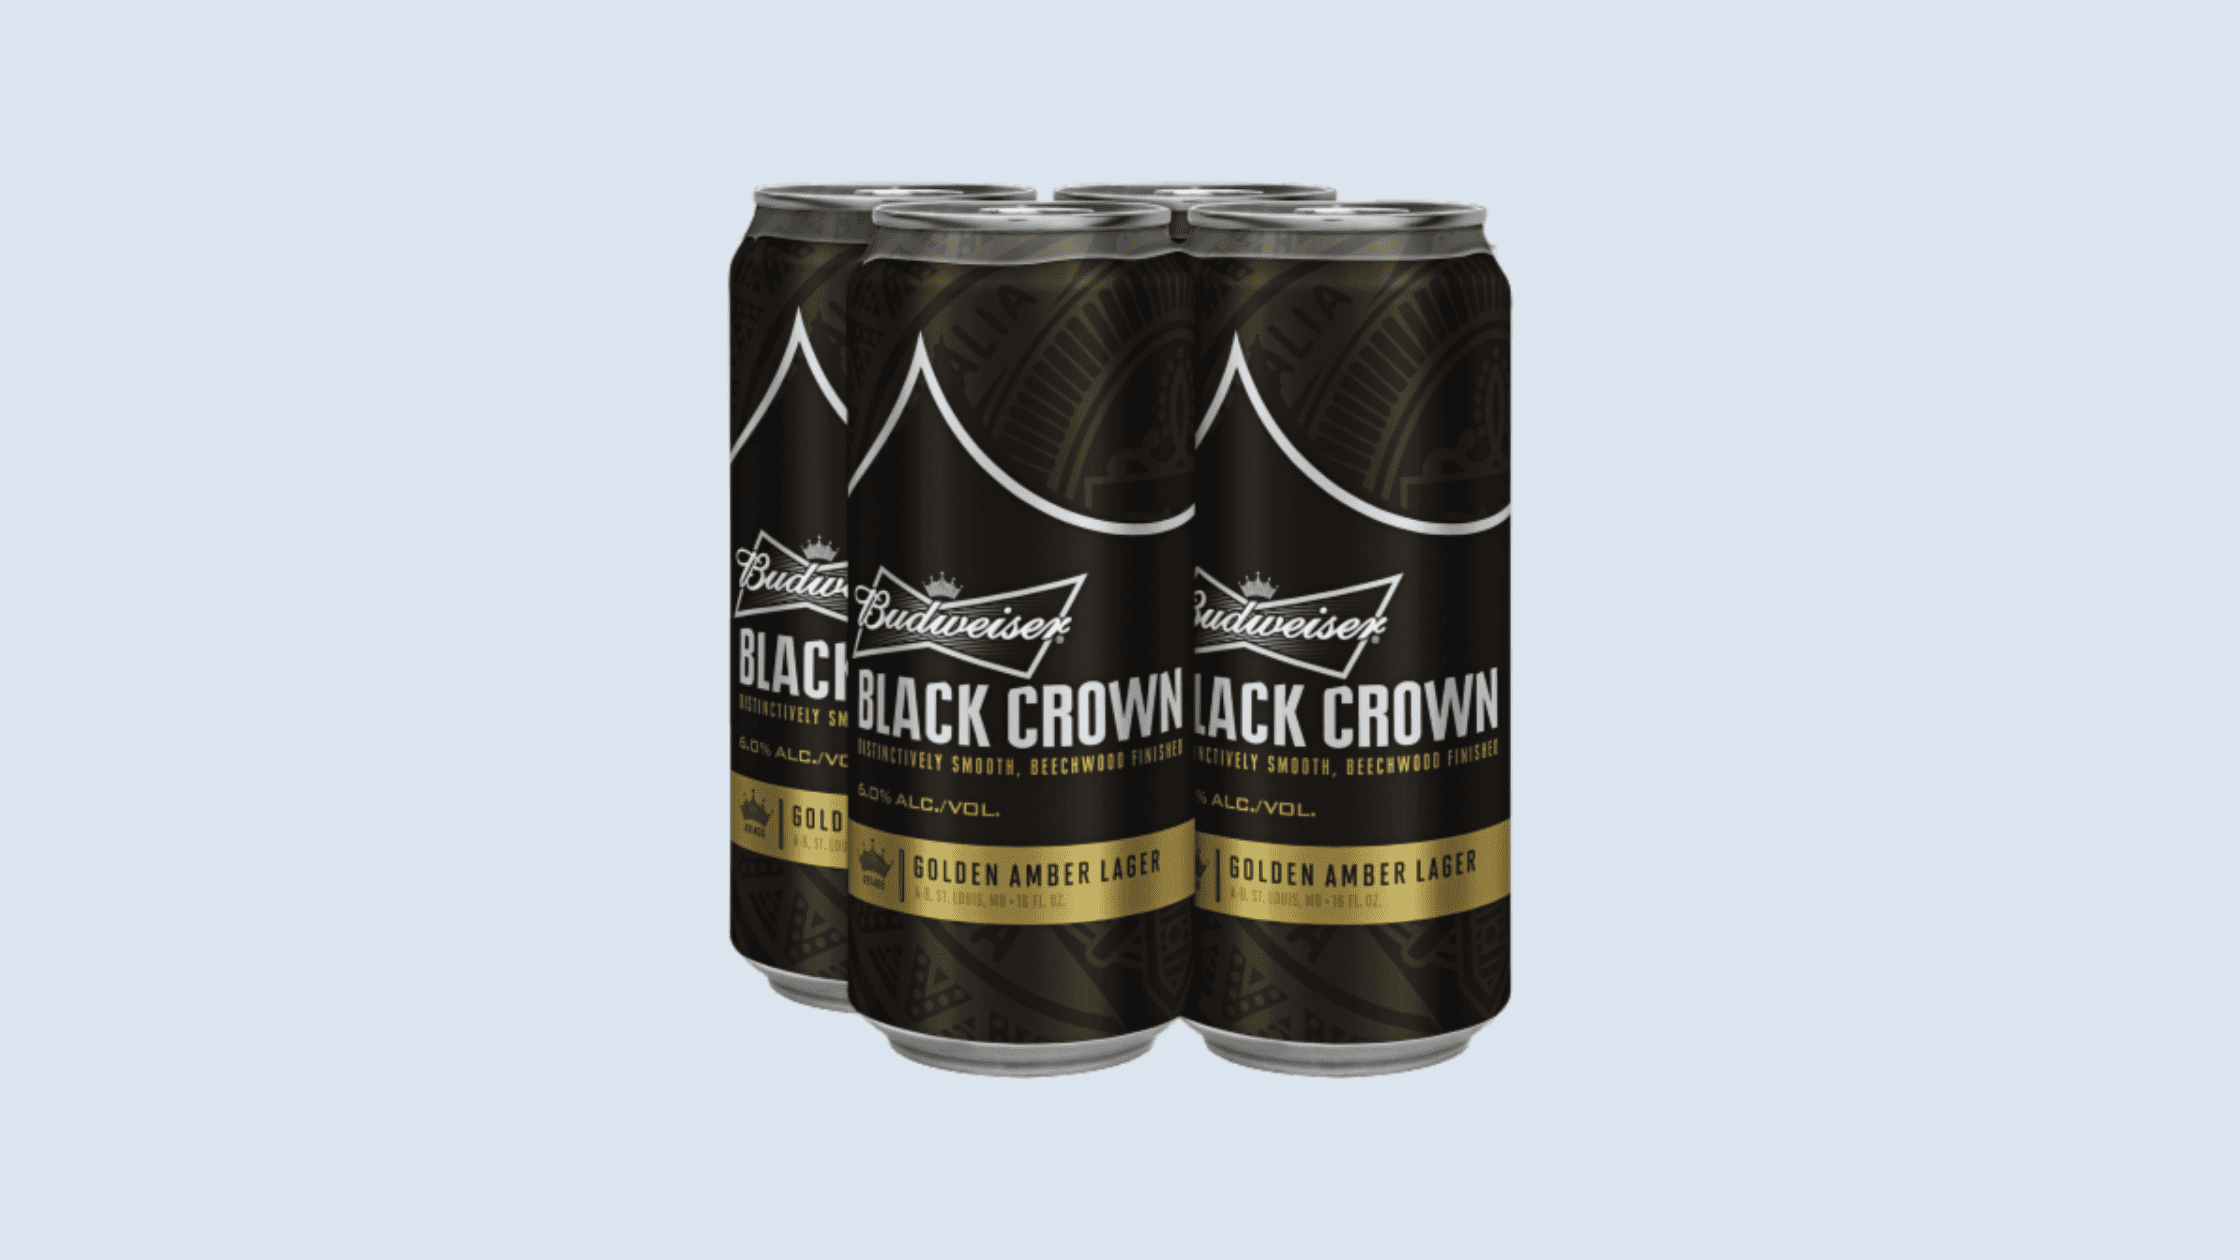 Budweiser Black Crown